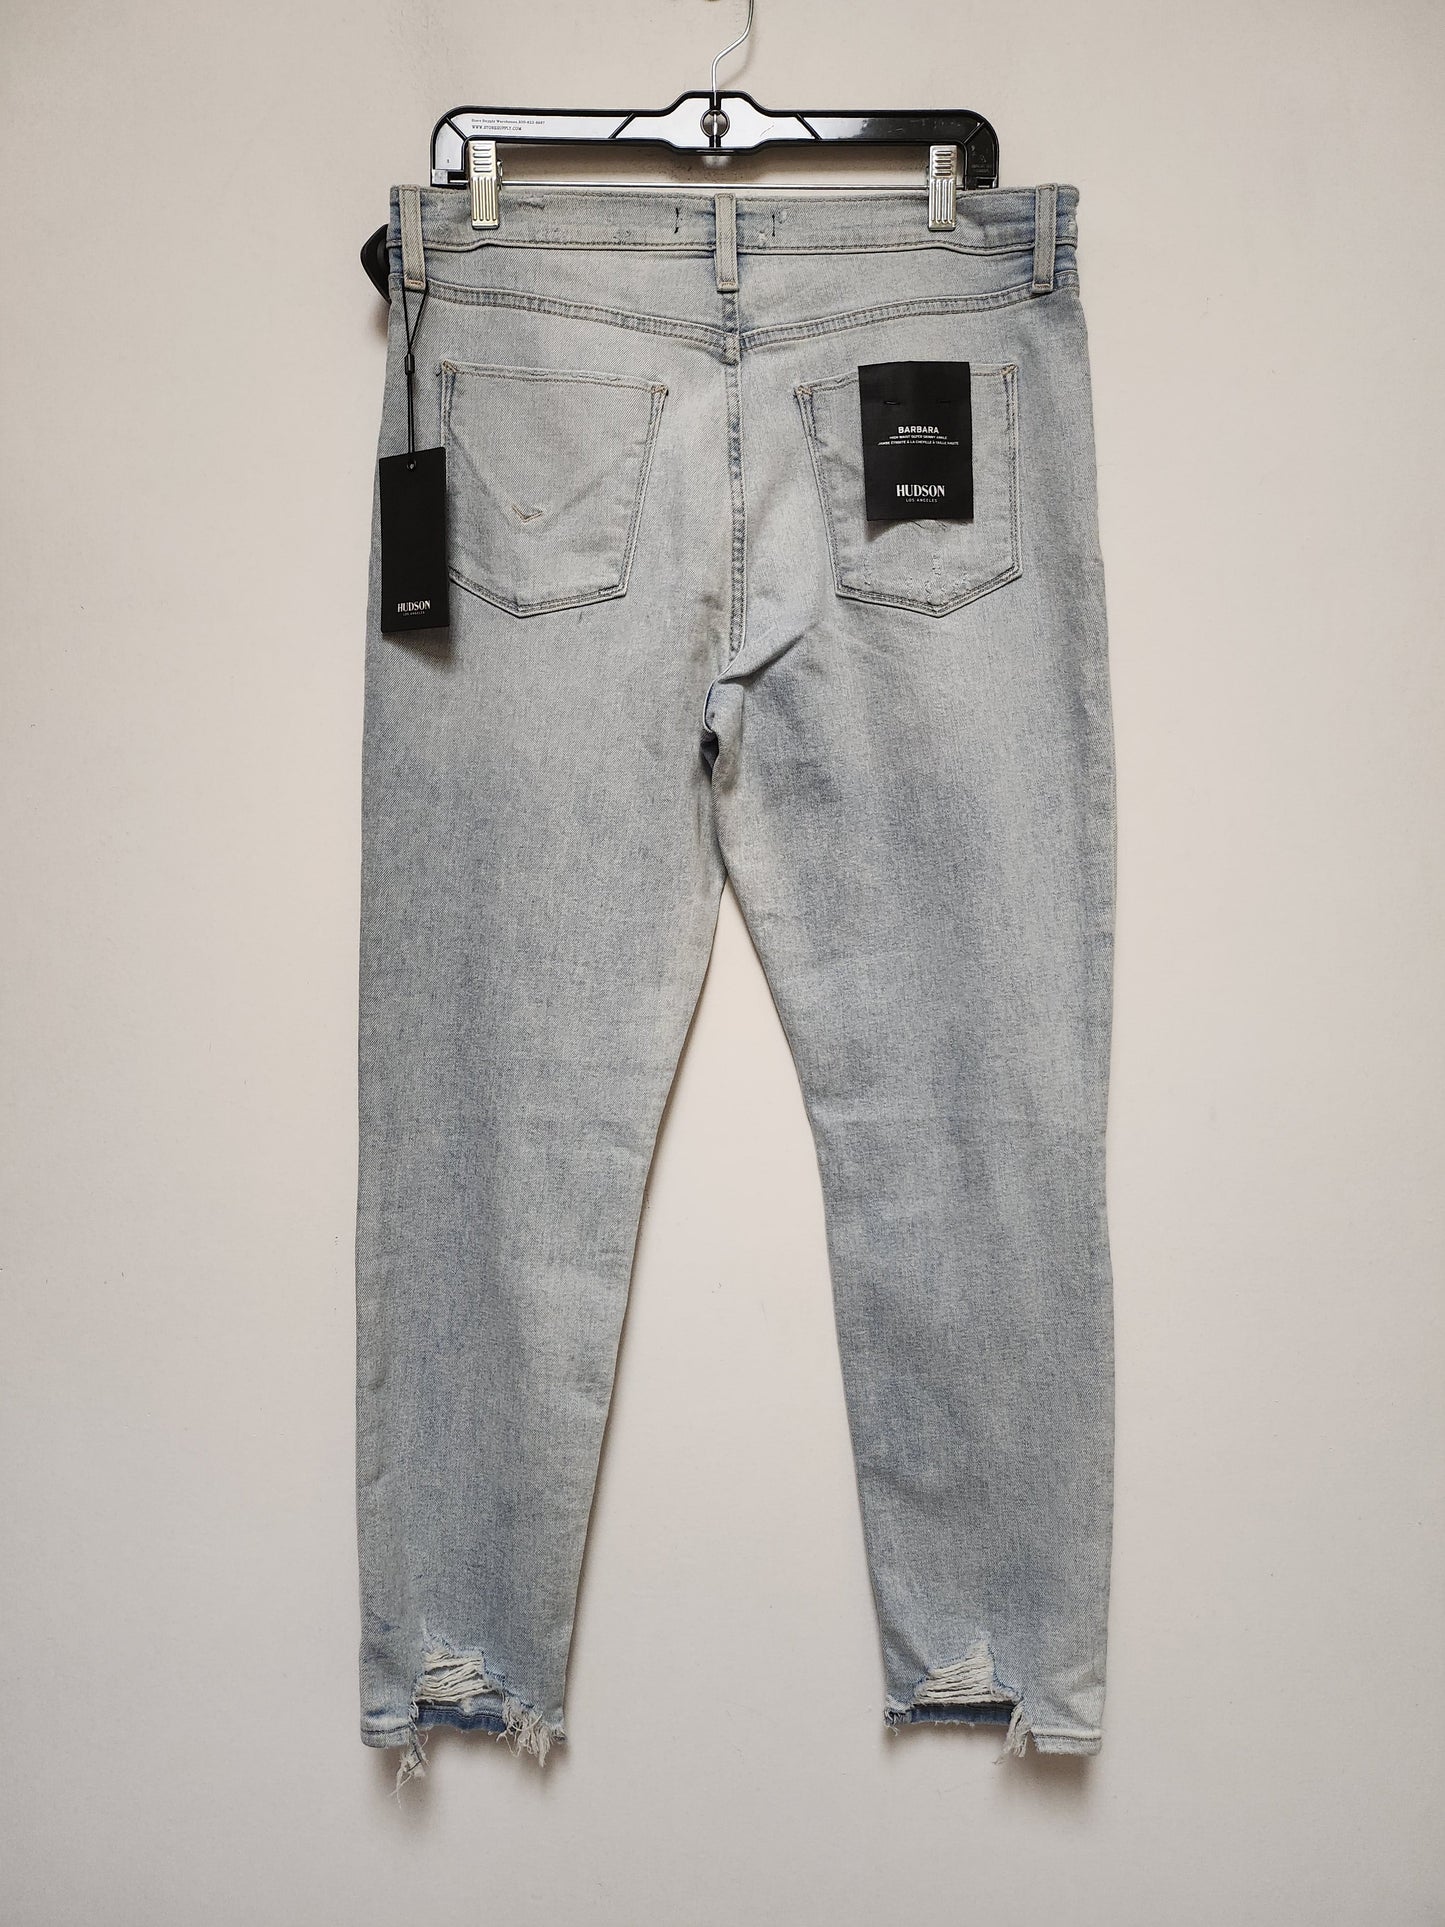 Blue Denim Jeans Skinny Hudson, Size 10